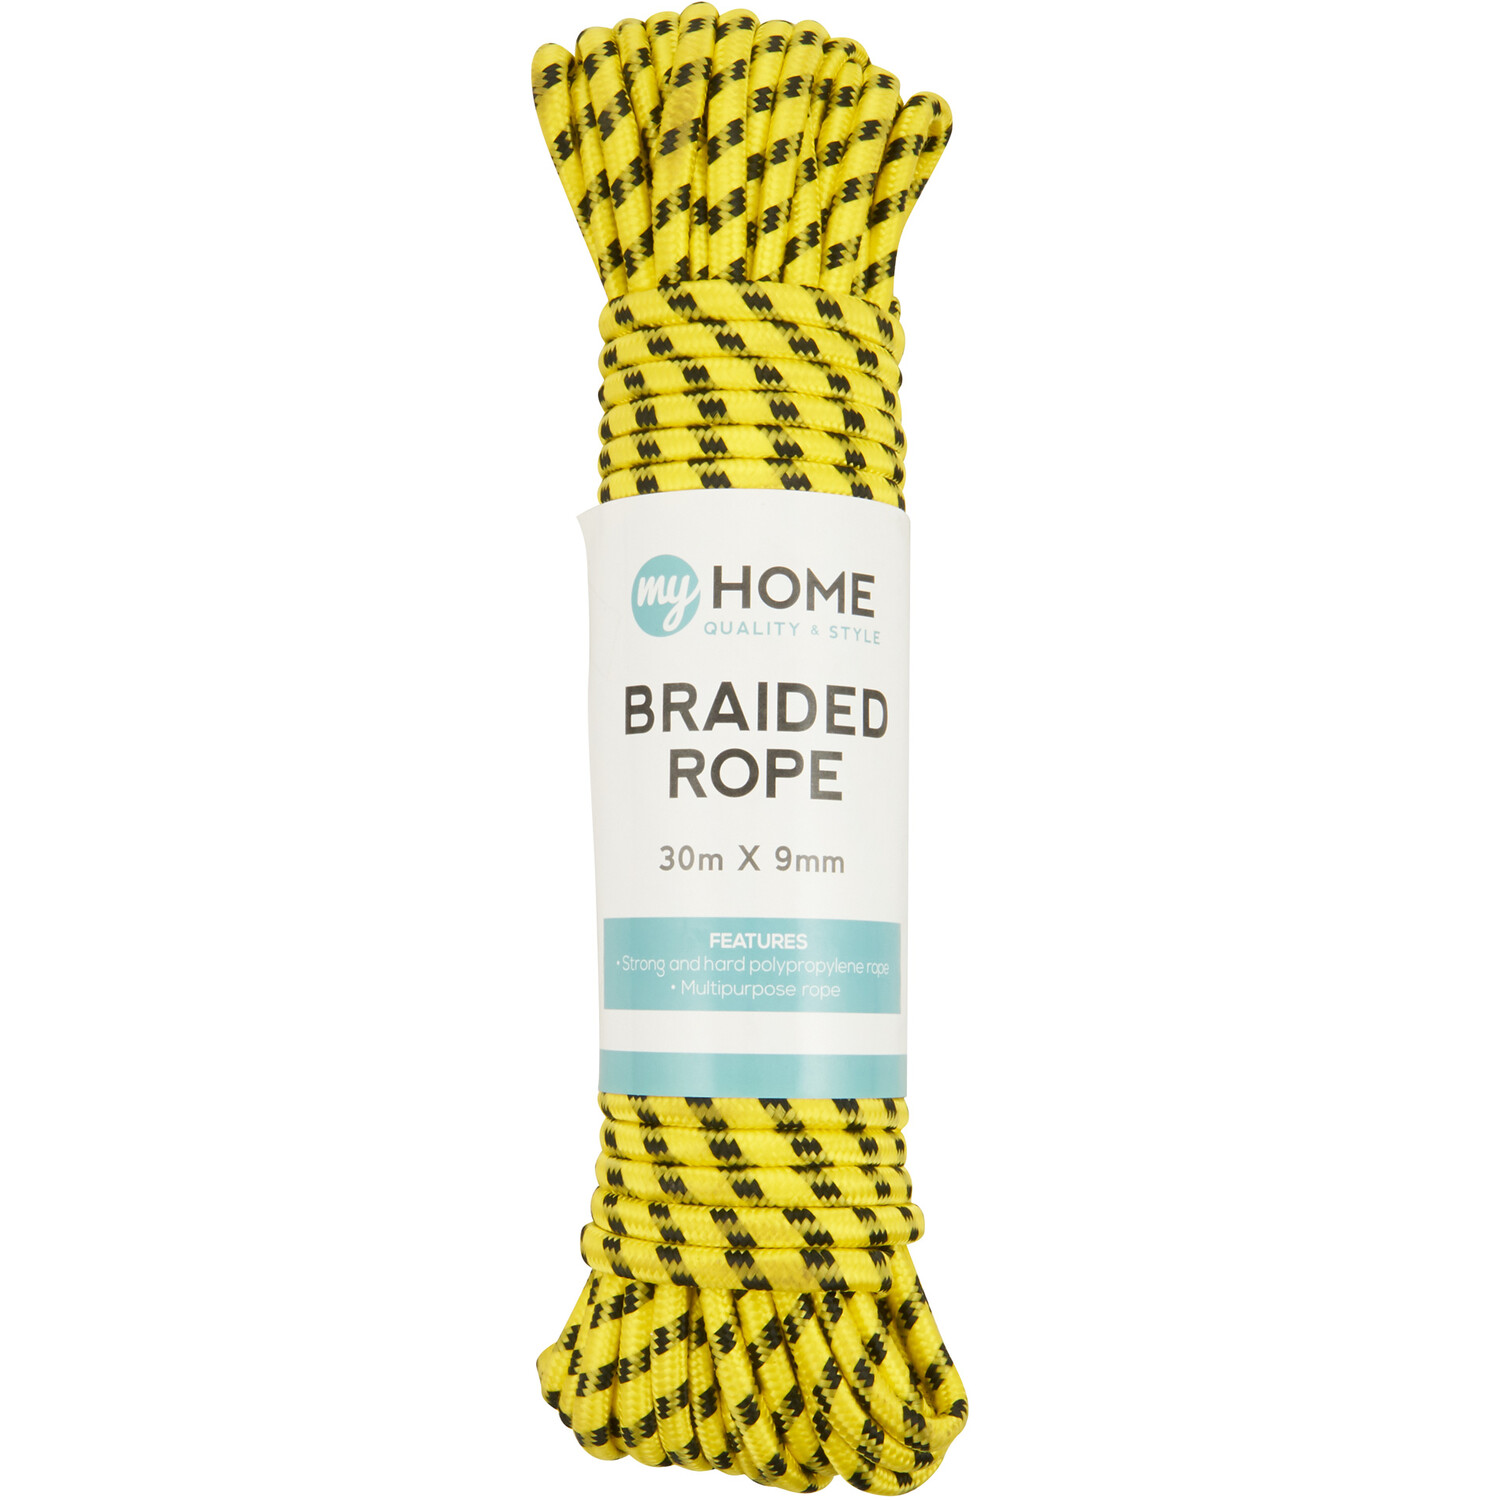 My Home 9mm x 30m Yellow Braided Rope Image 1